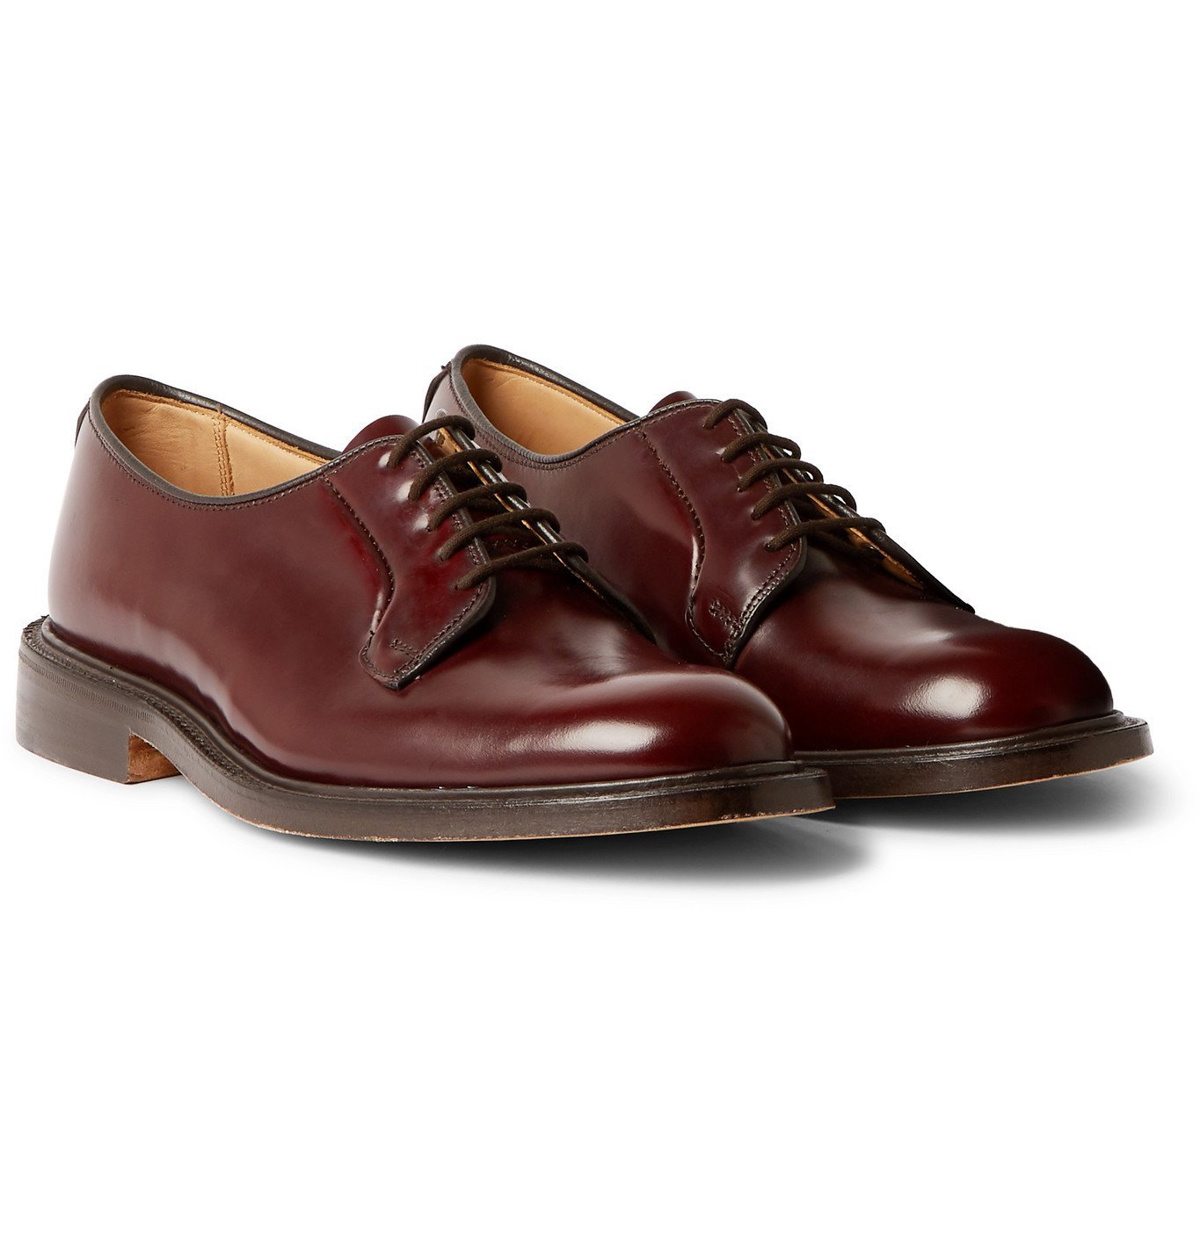 Tricker's - Robert Leather Derby Shoes - Burgundy Tricker's